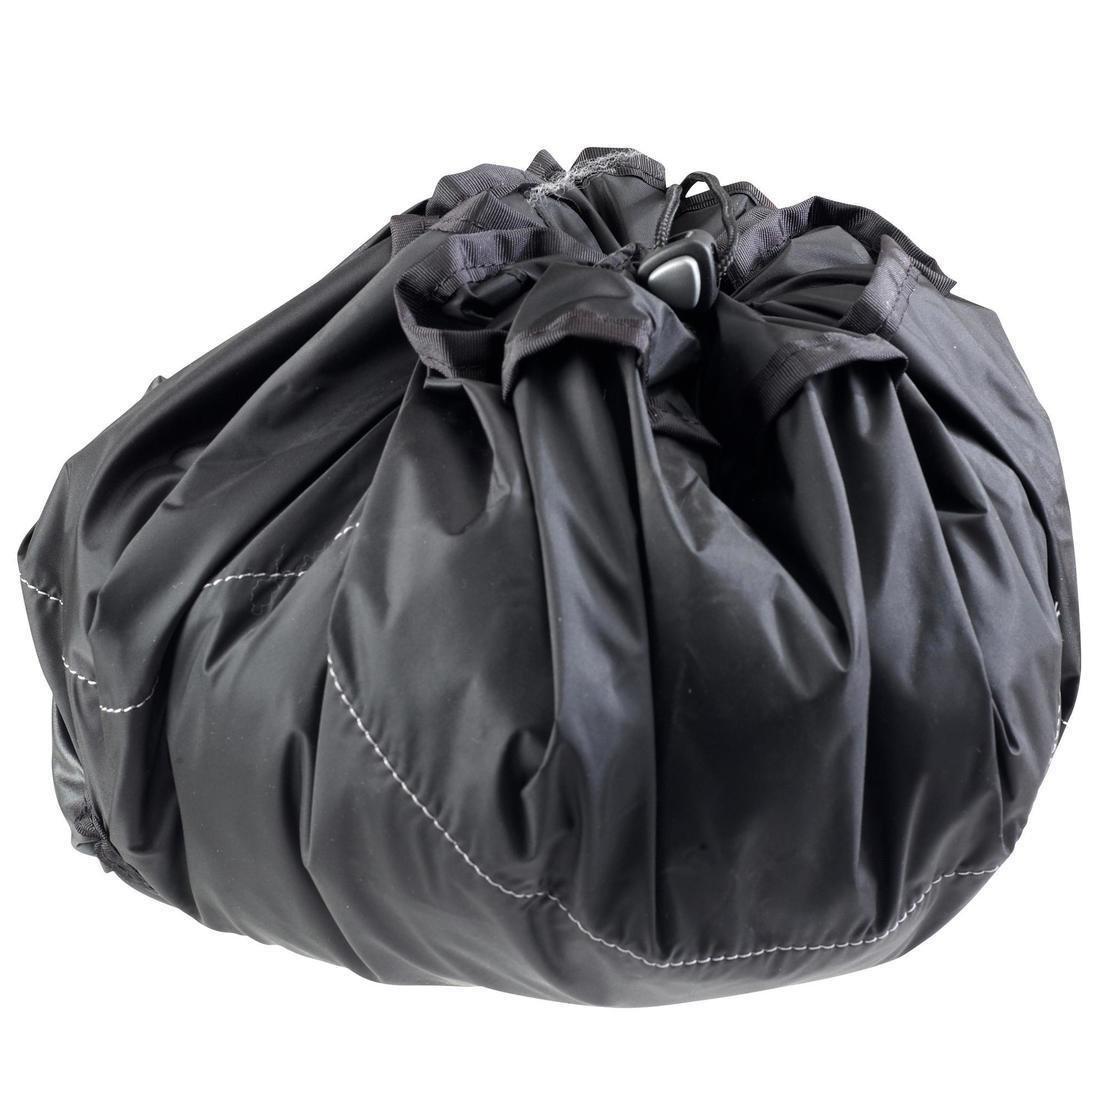 DOMYOS - Fitness Bag Ptwo, Black